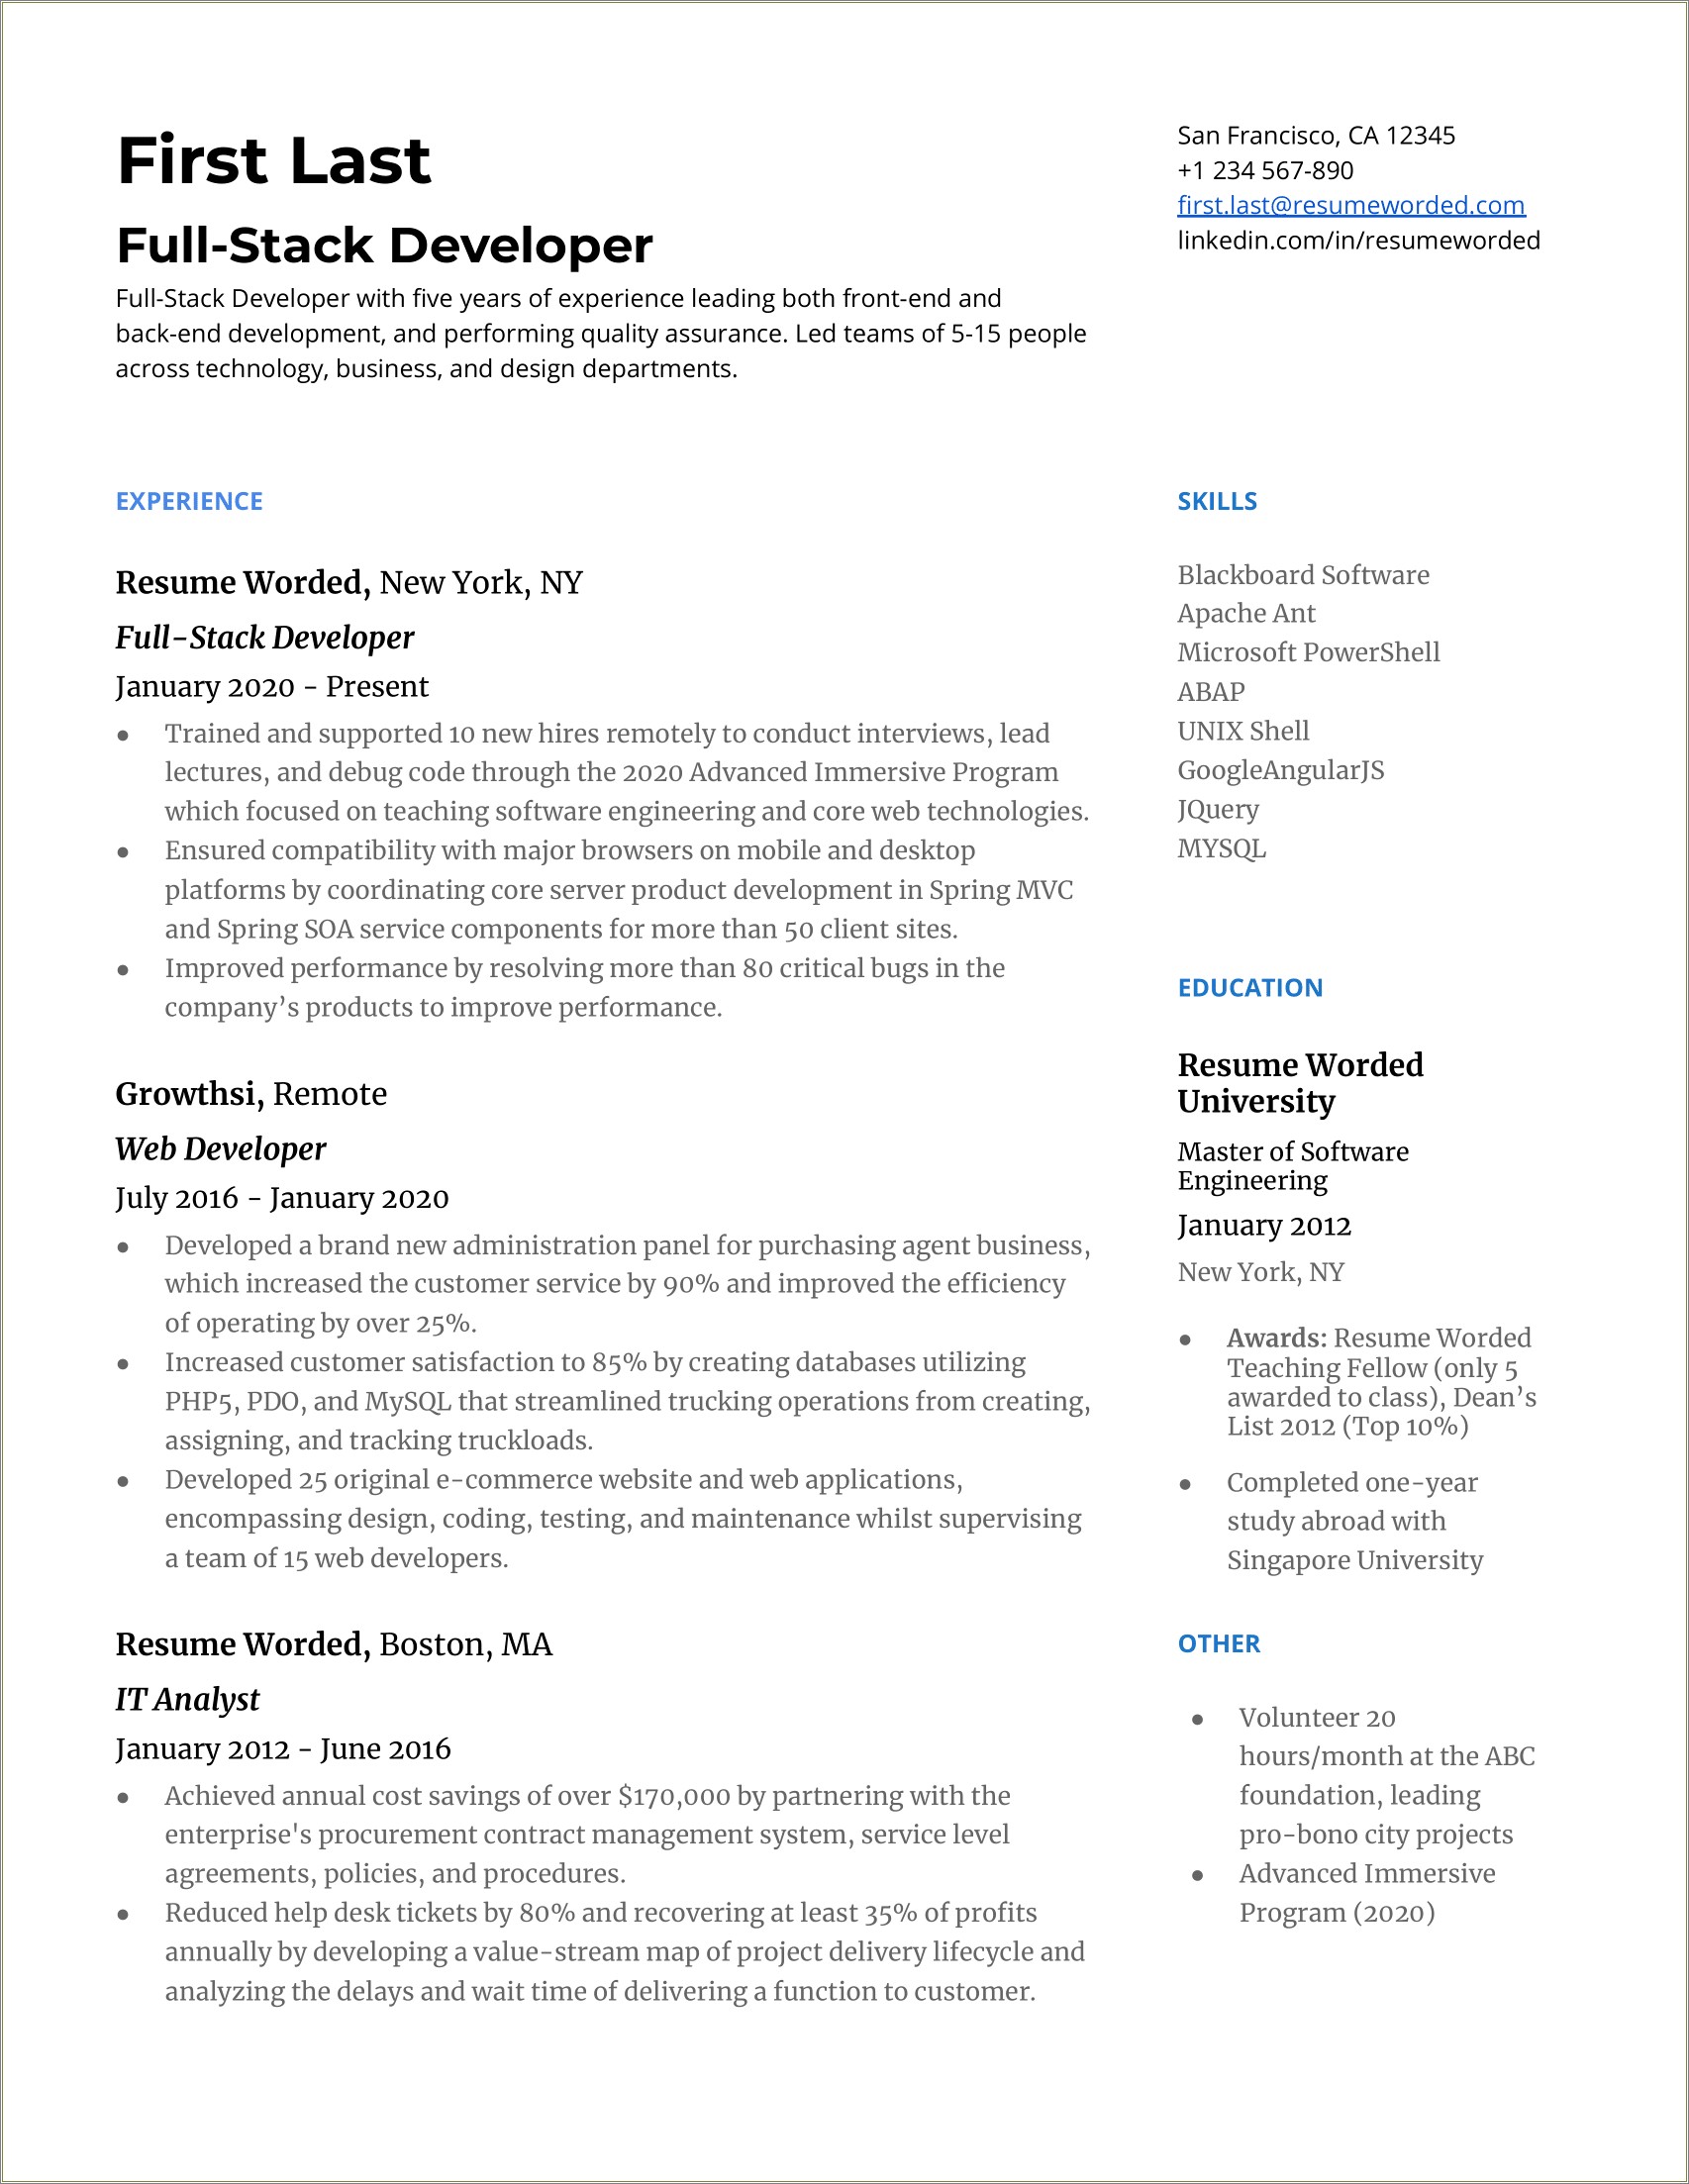 Resume Listing Mac Terminal Skills Windows Powershell